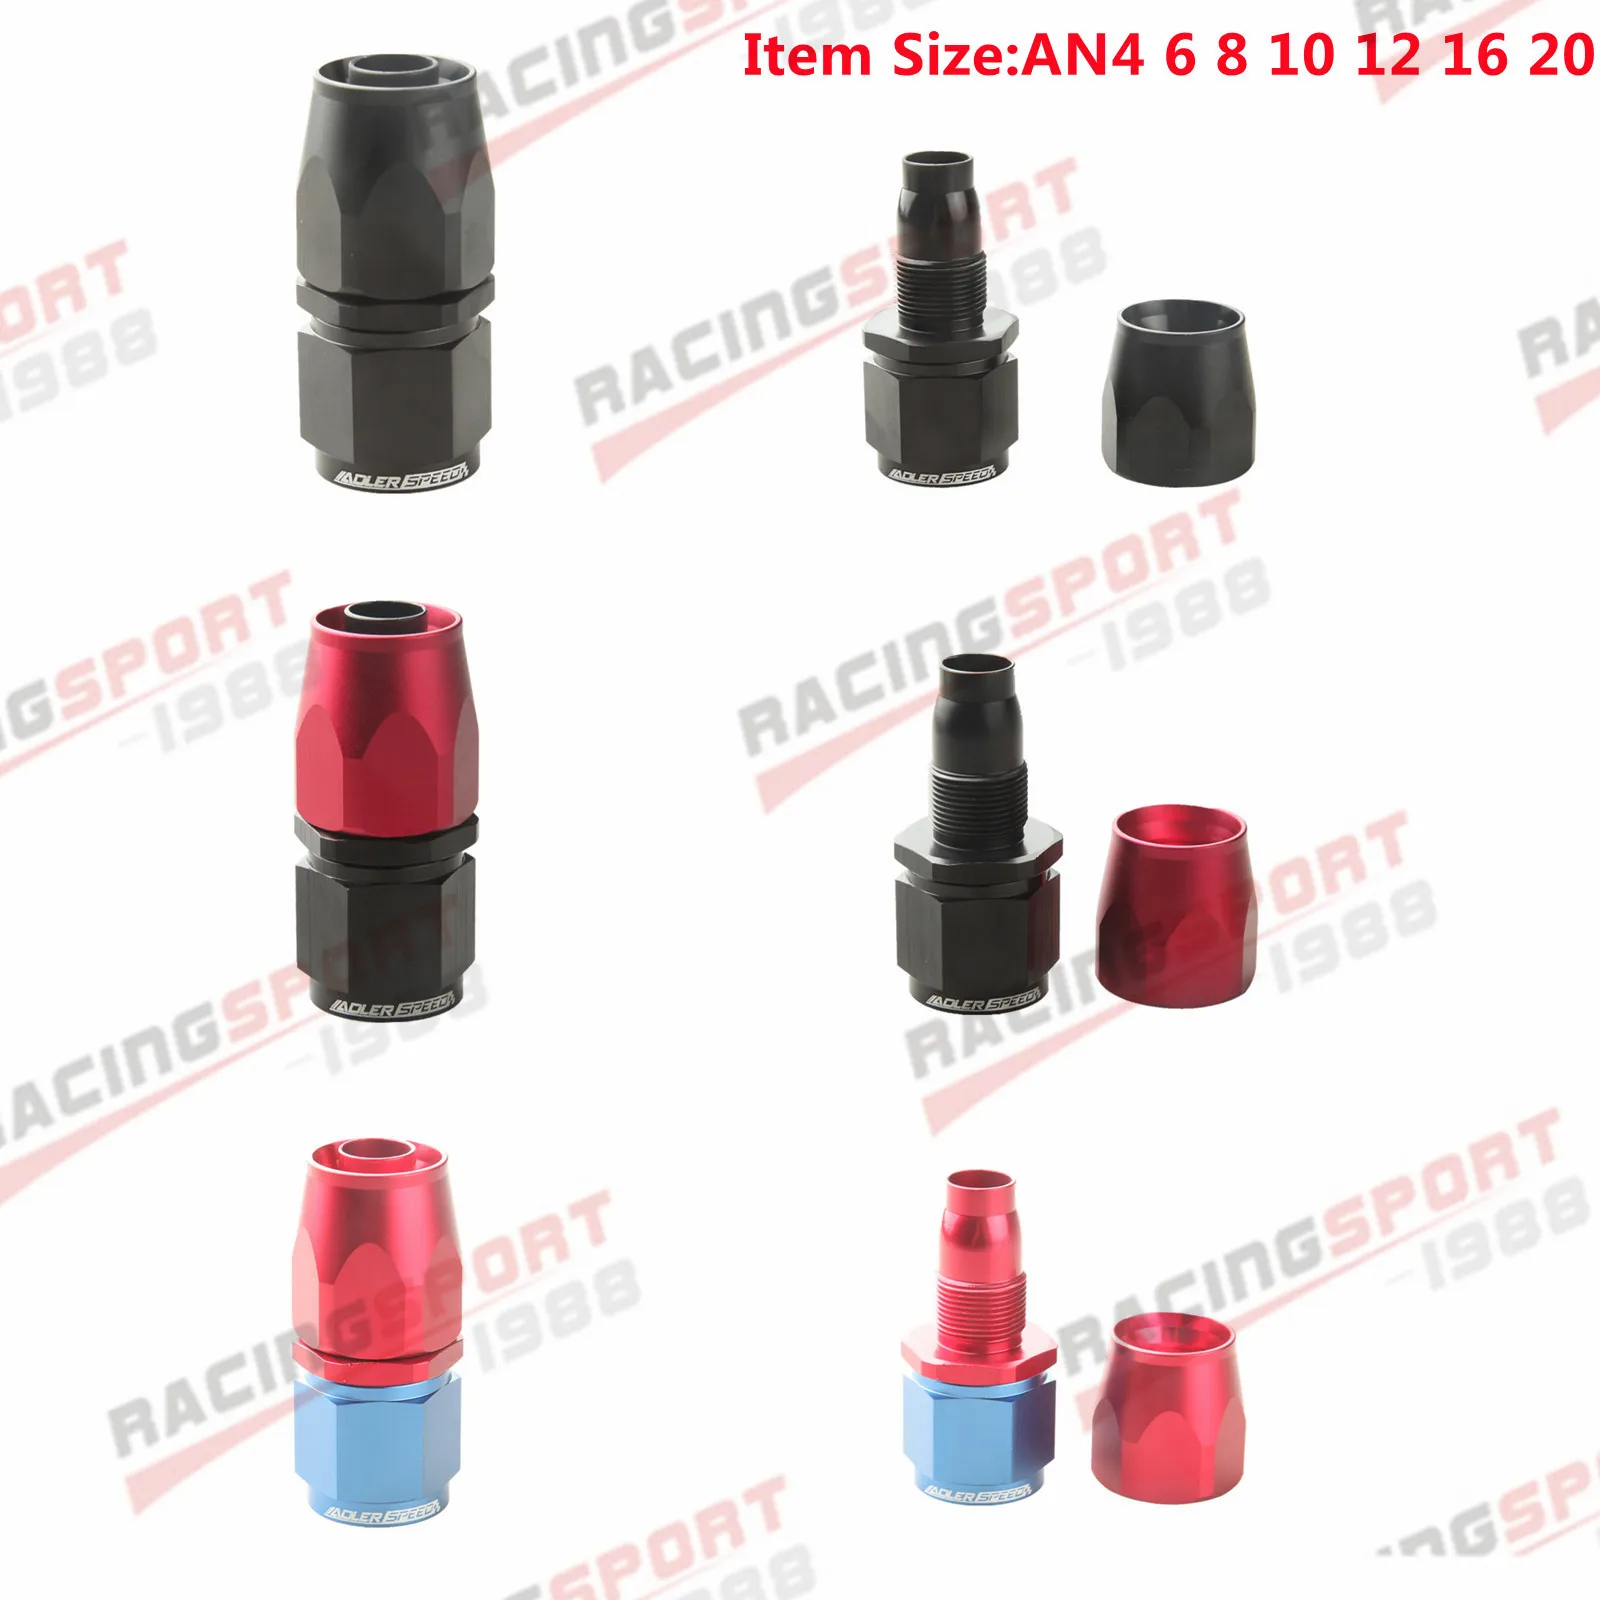 

Universal AN4/AN6/AN8/AN10/AN12/AN16/AN20 Straight 0 Degree Oil Fuel Swivel Hose End Fitting Oil Hose End Adaptor Kit Black Red